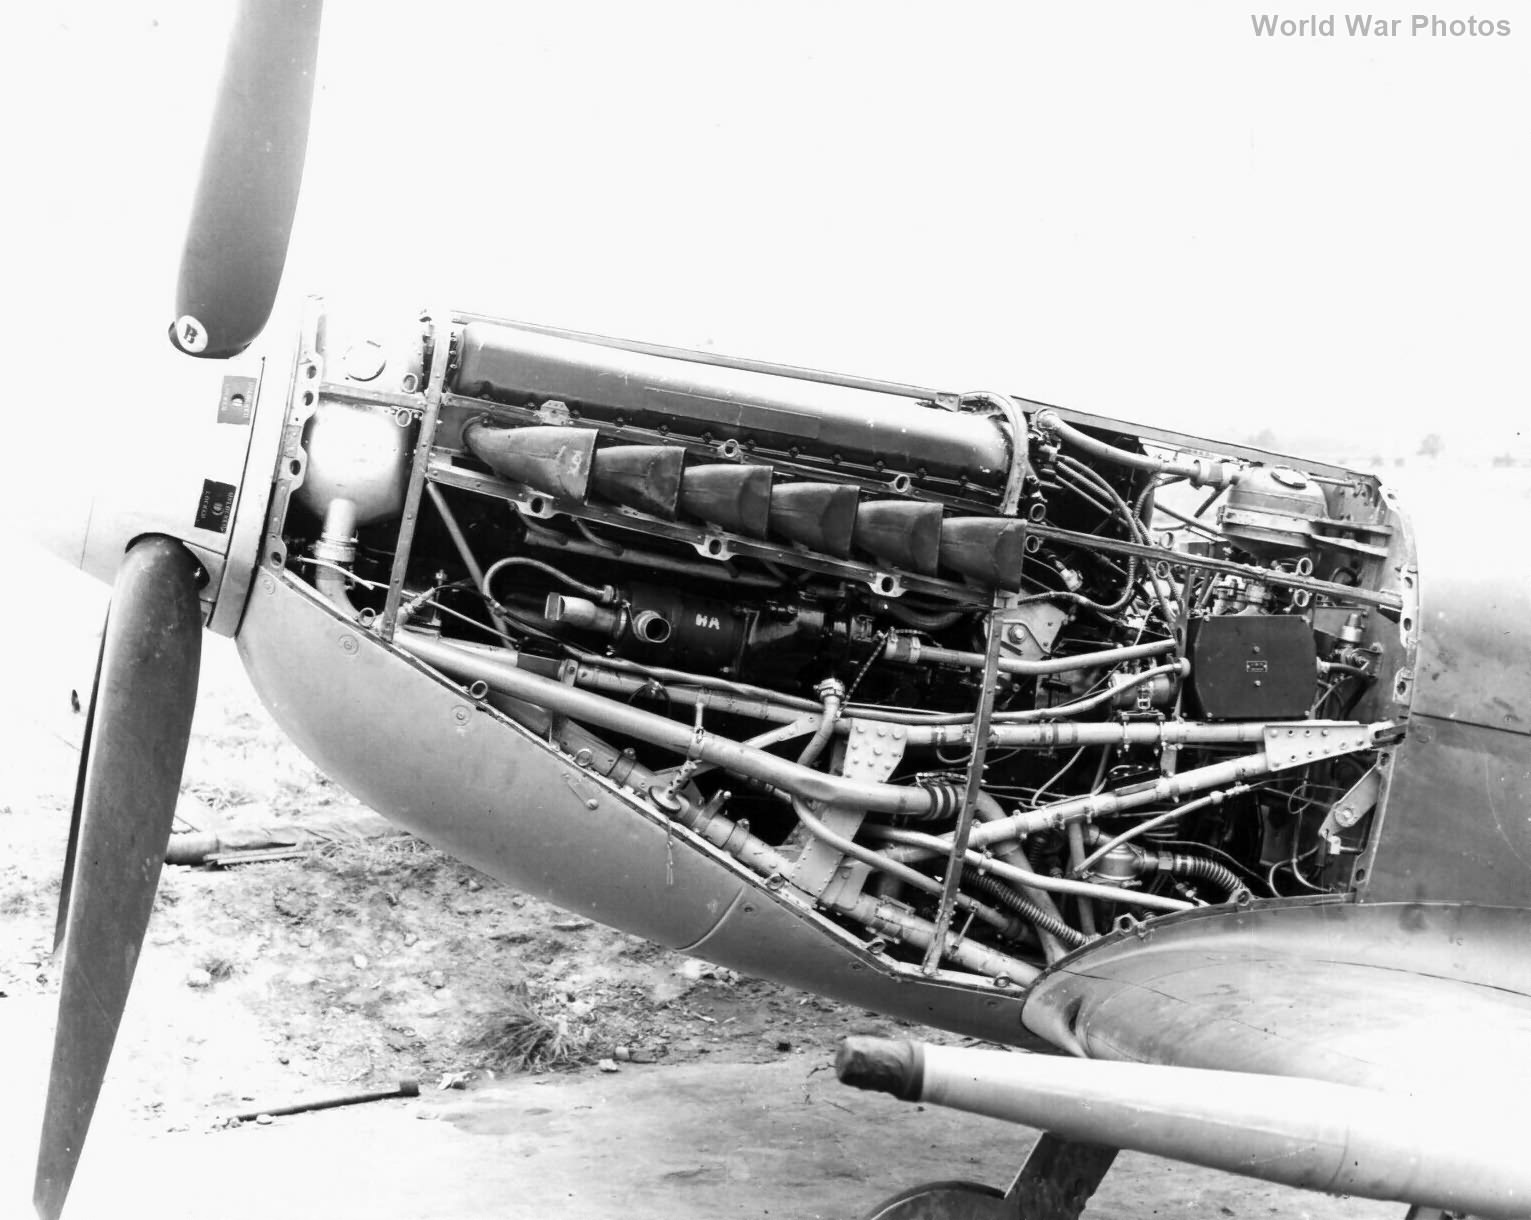 Rolls-Royce Merlin engine installed in a Spitfire